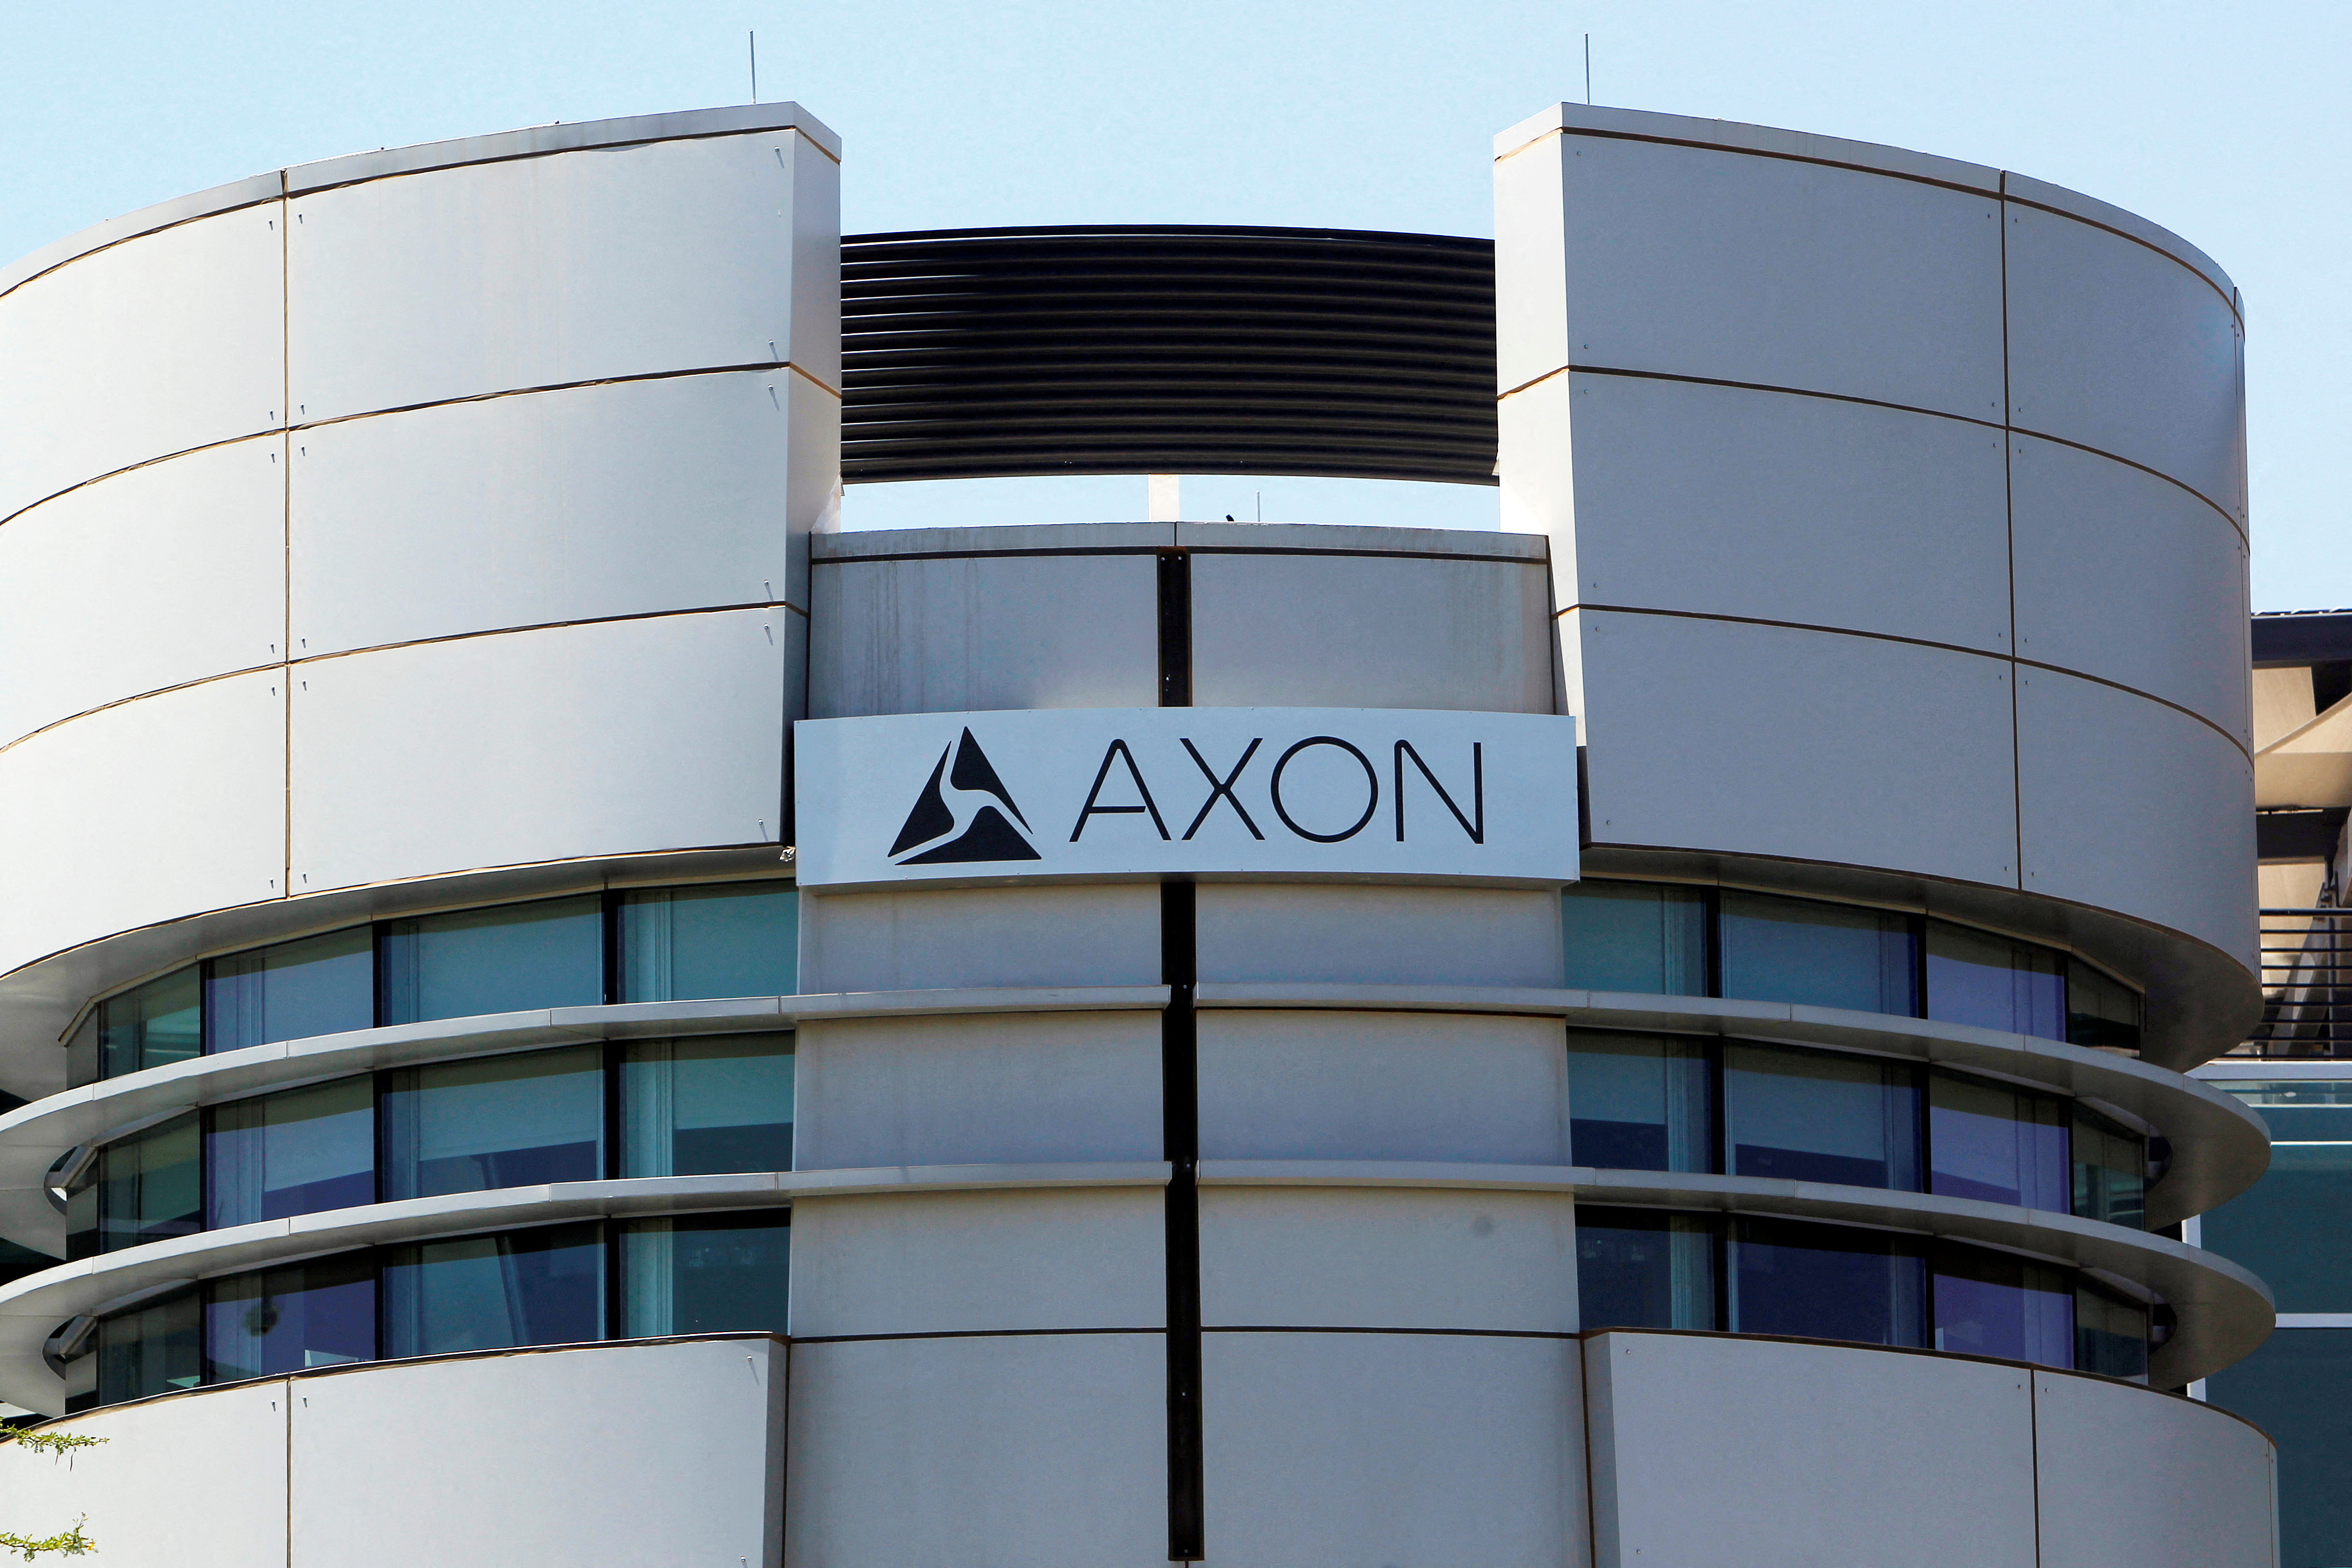 The headquarters for Axon Enterprise Inc, formerly Taser International, is seen in Scottsdale